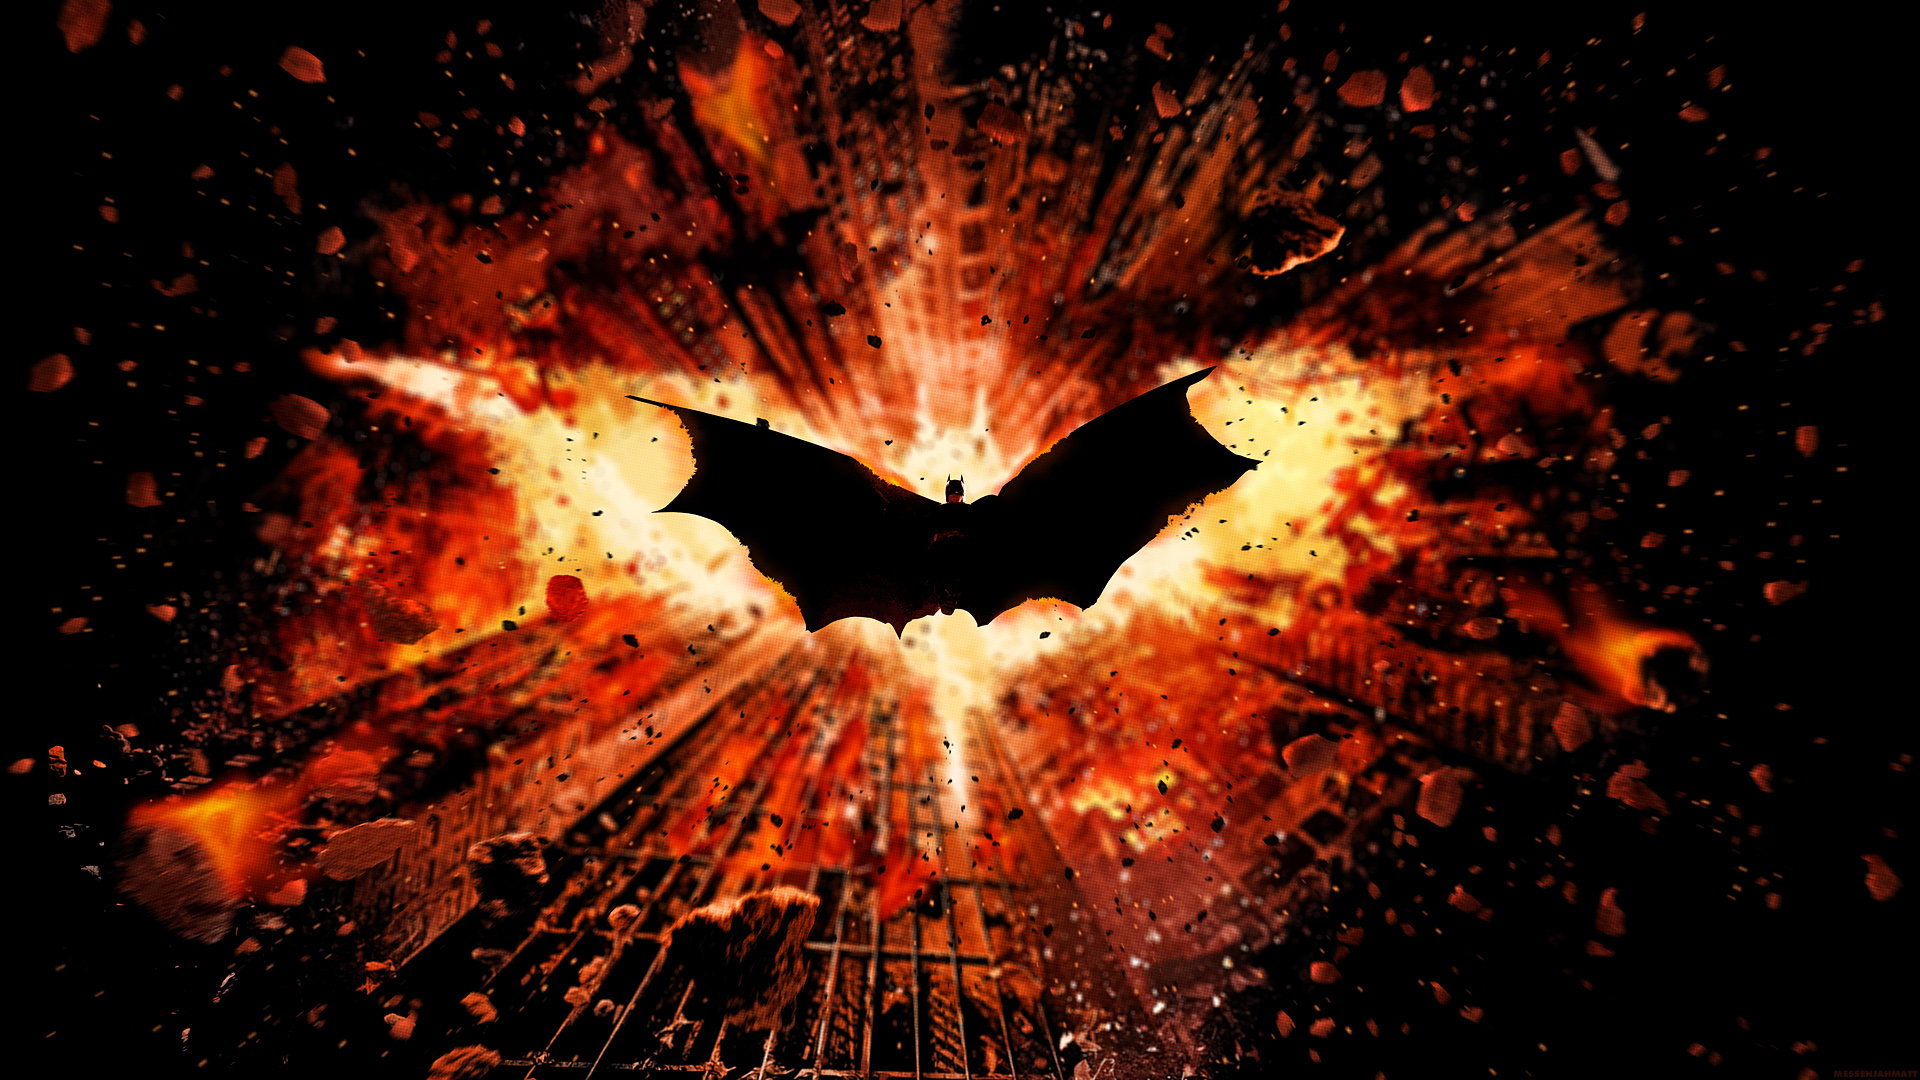 Free The Dark Knight Rises high quality wallpaper ID:161359 for hd 1920x1080 desktop